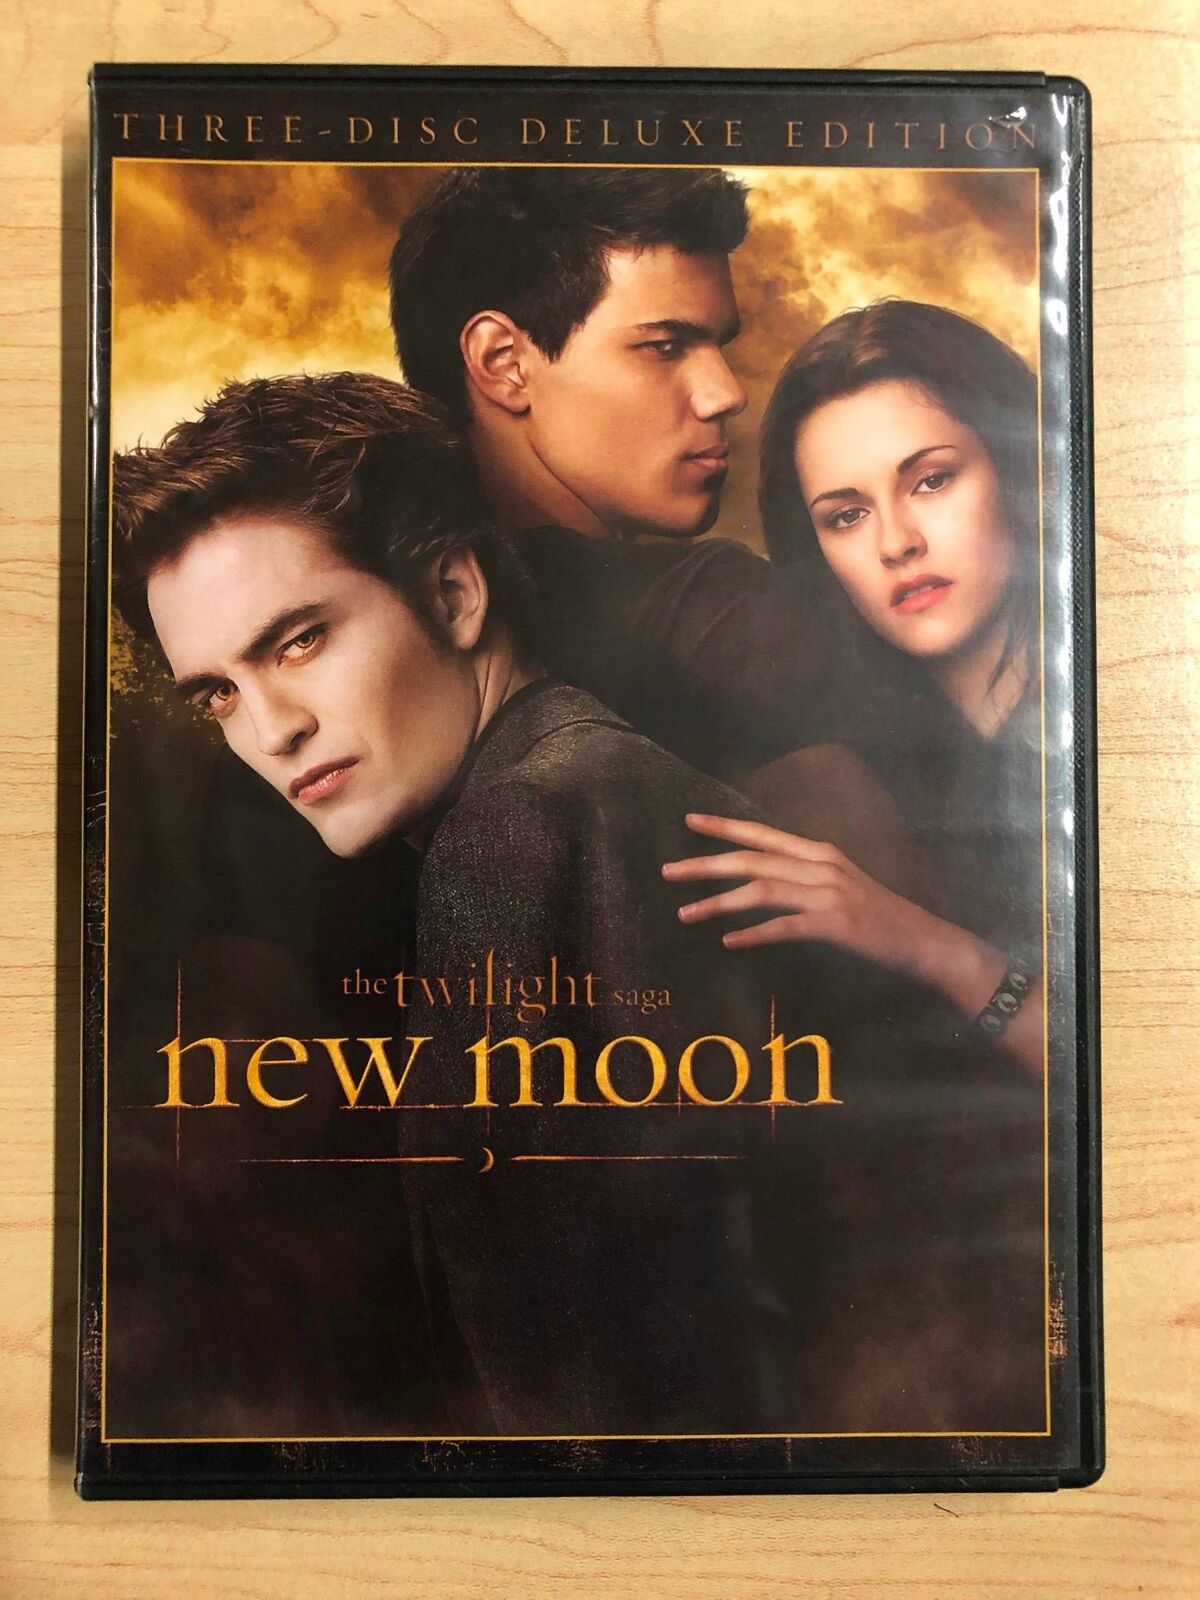 The Twilight Saga - New Moon (DVD, 2009, 3-disc deluxe edition) - G0906